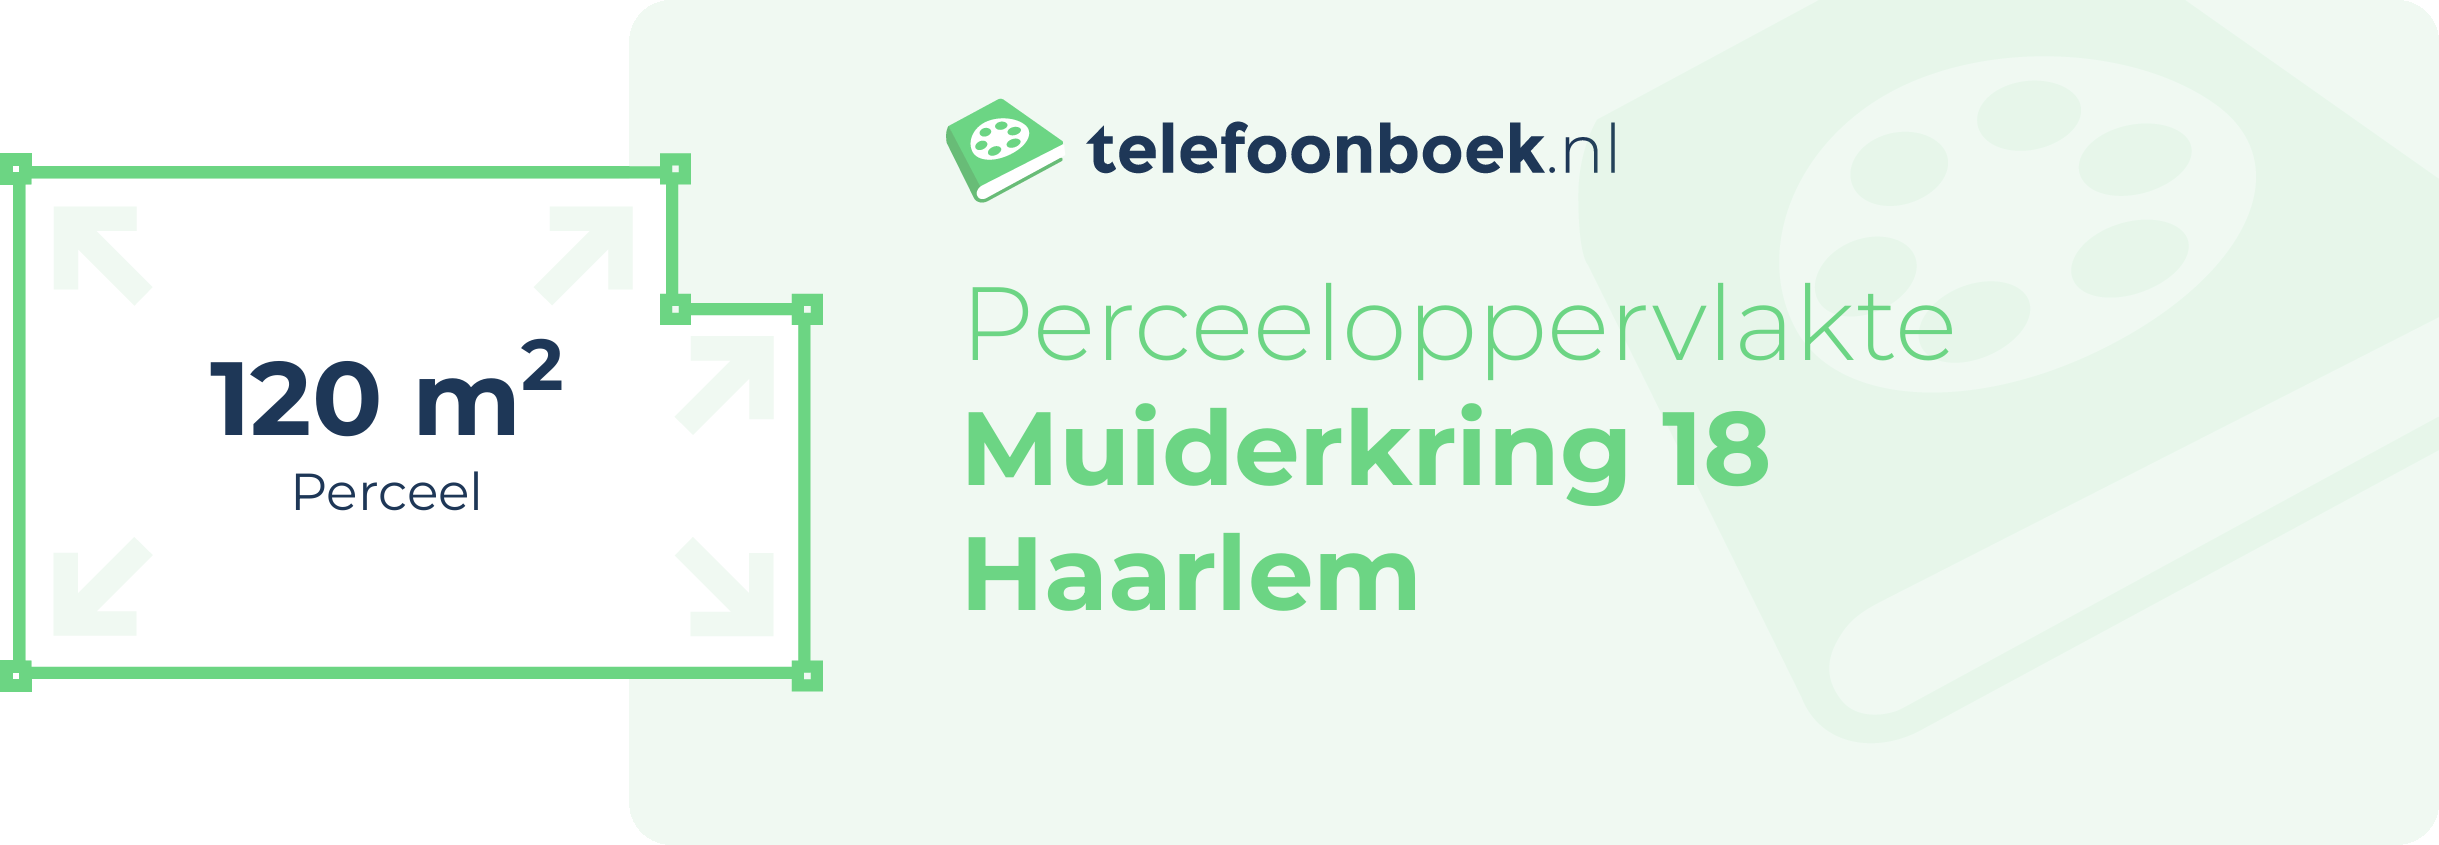 Perceeloppervlakte Muiderkring 18 Haarlem